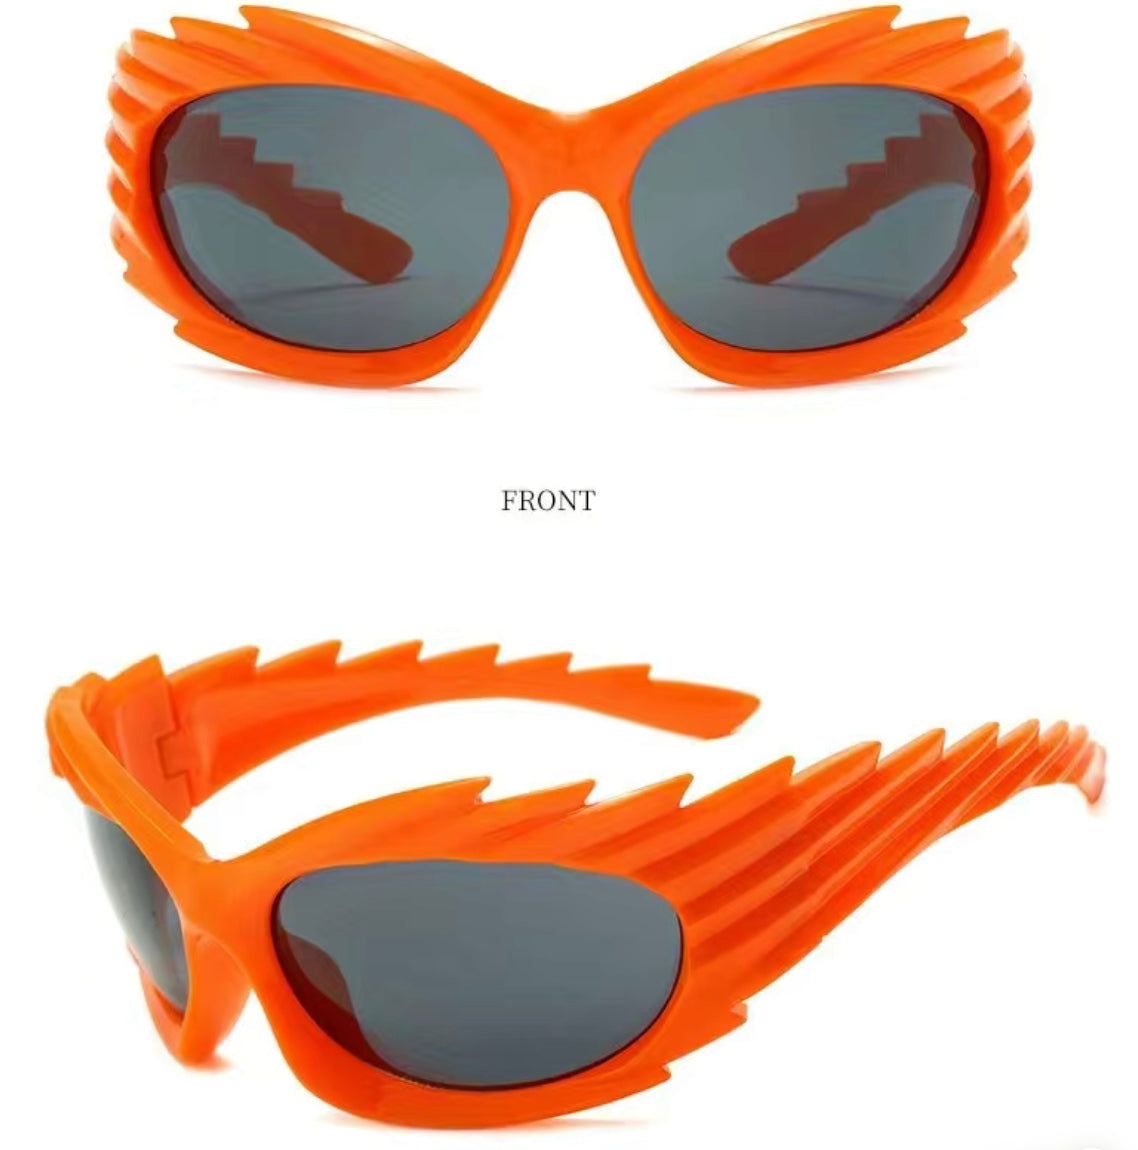 Space Face (orange)  Sunglasses